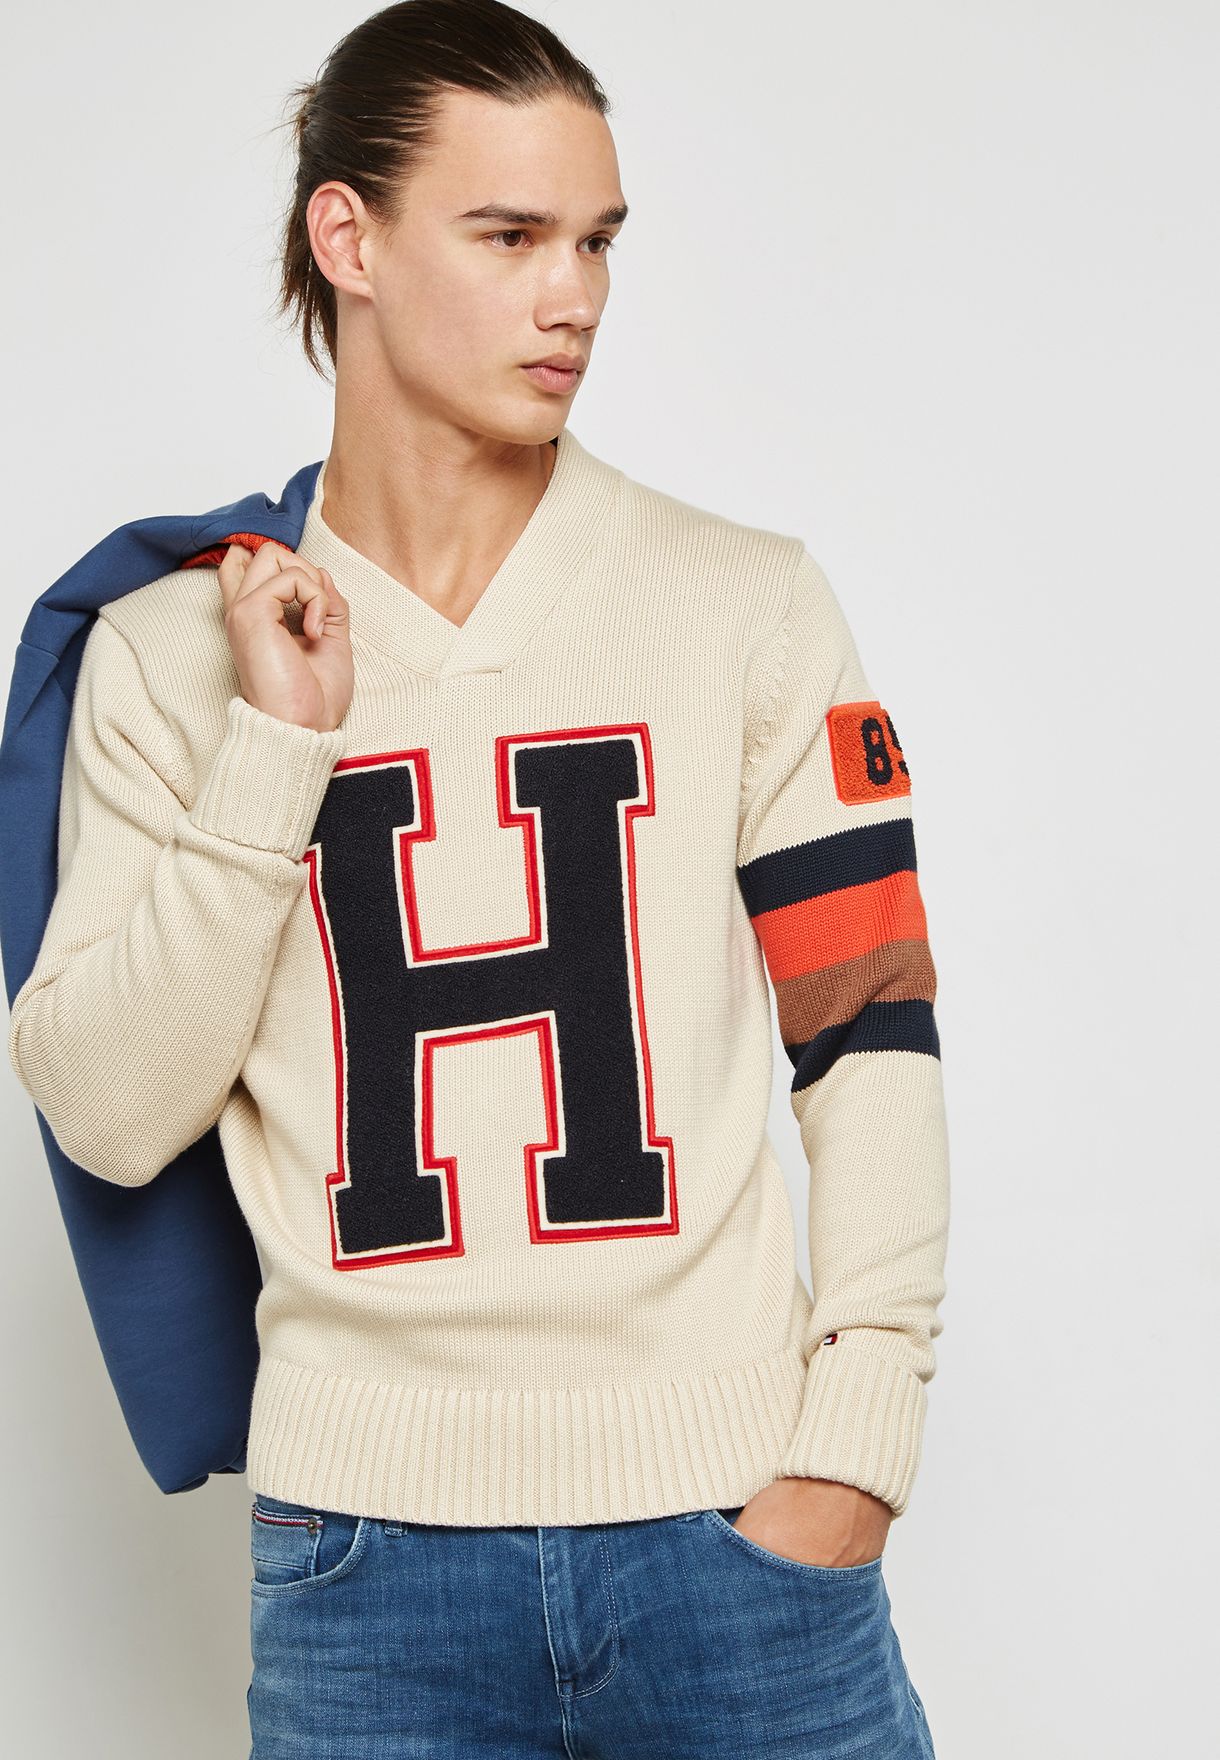 Grommen In tegenspraak Verbieden Buy Tommy Hilfiger beige H Print Sweater for Men in MENA, Worldwide